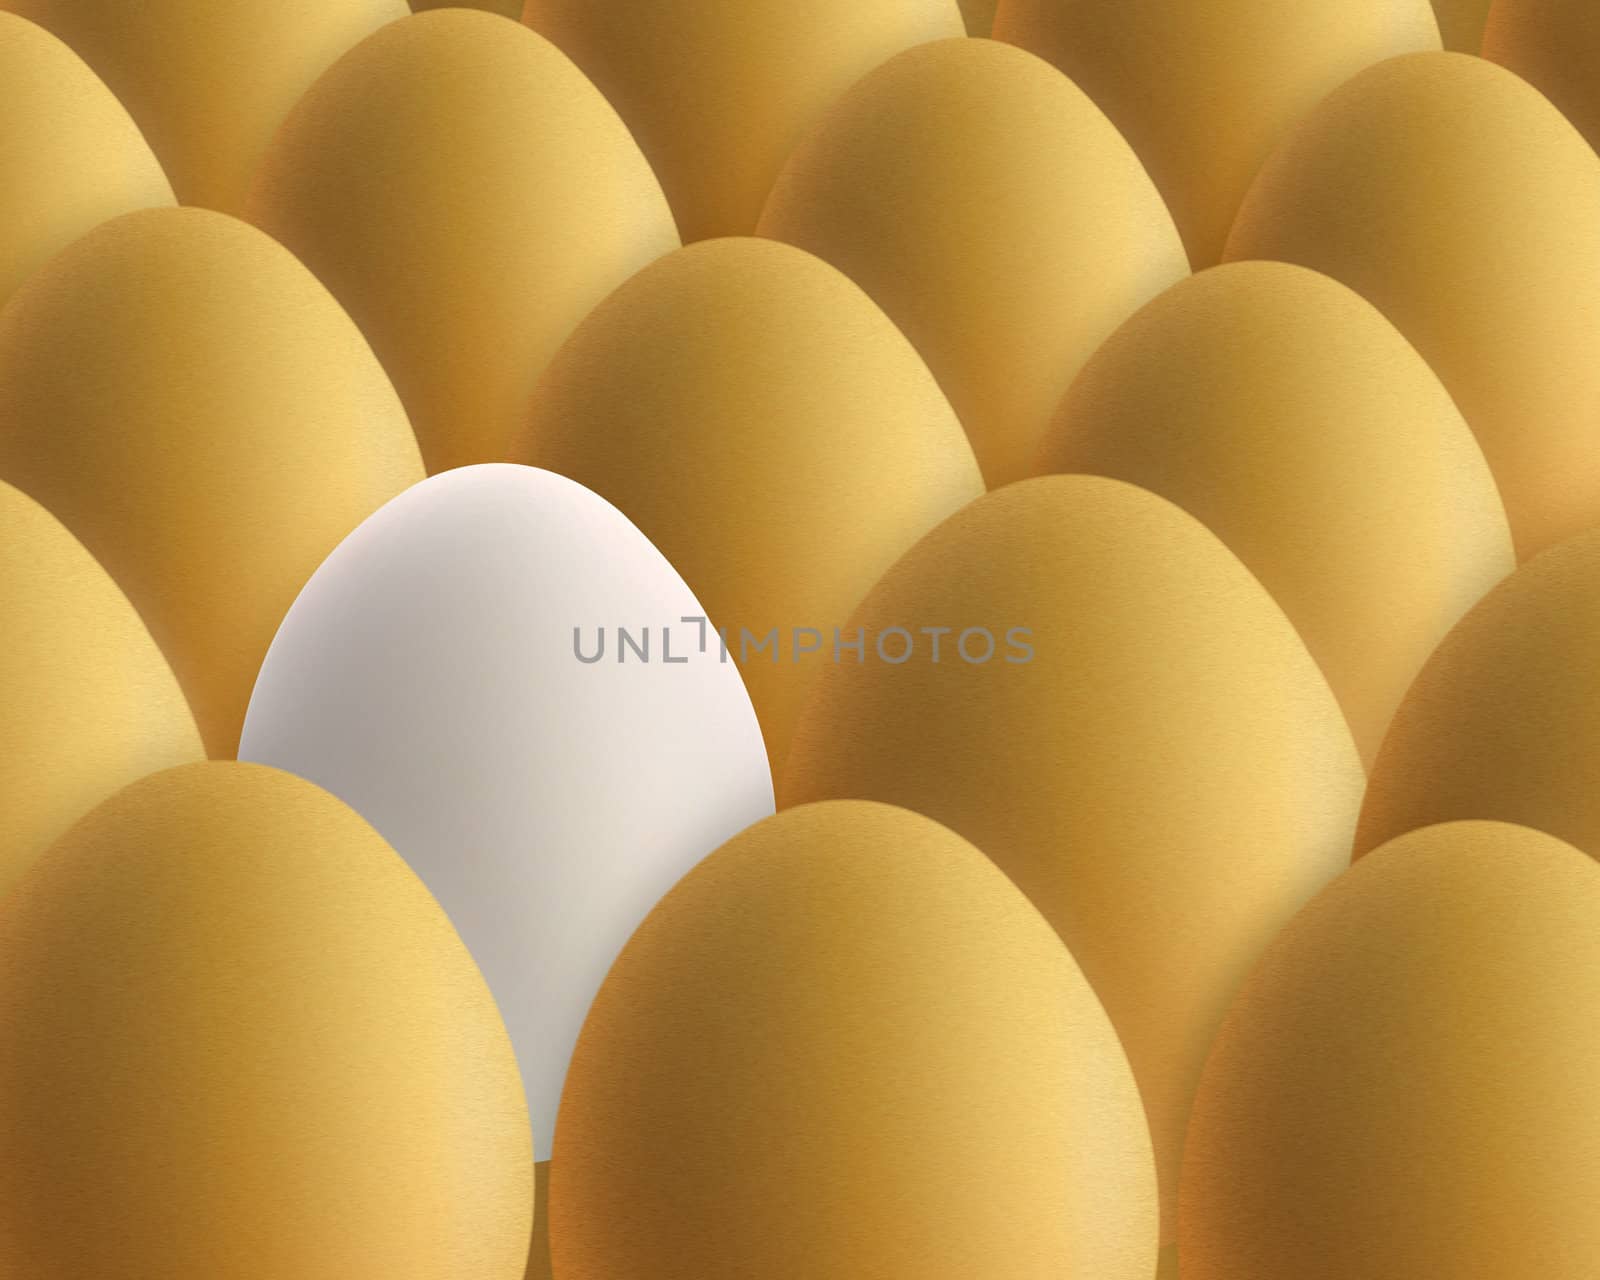 unique white egg between golden eggs